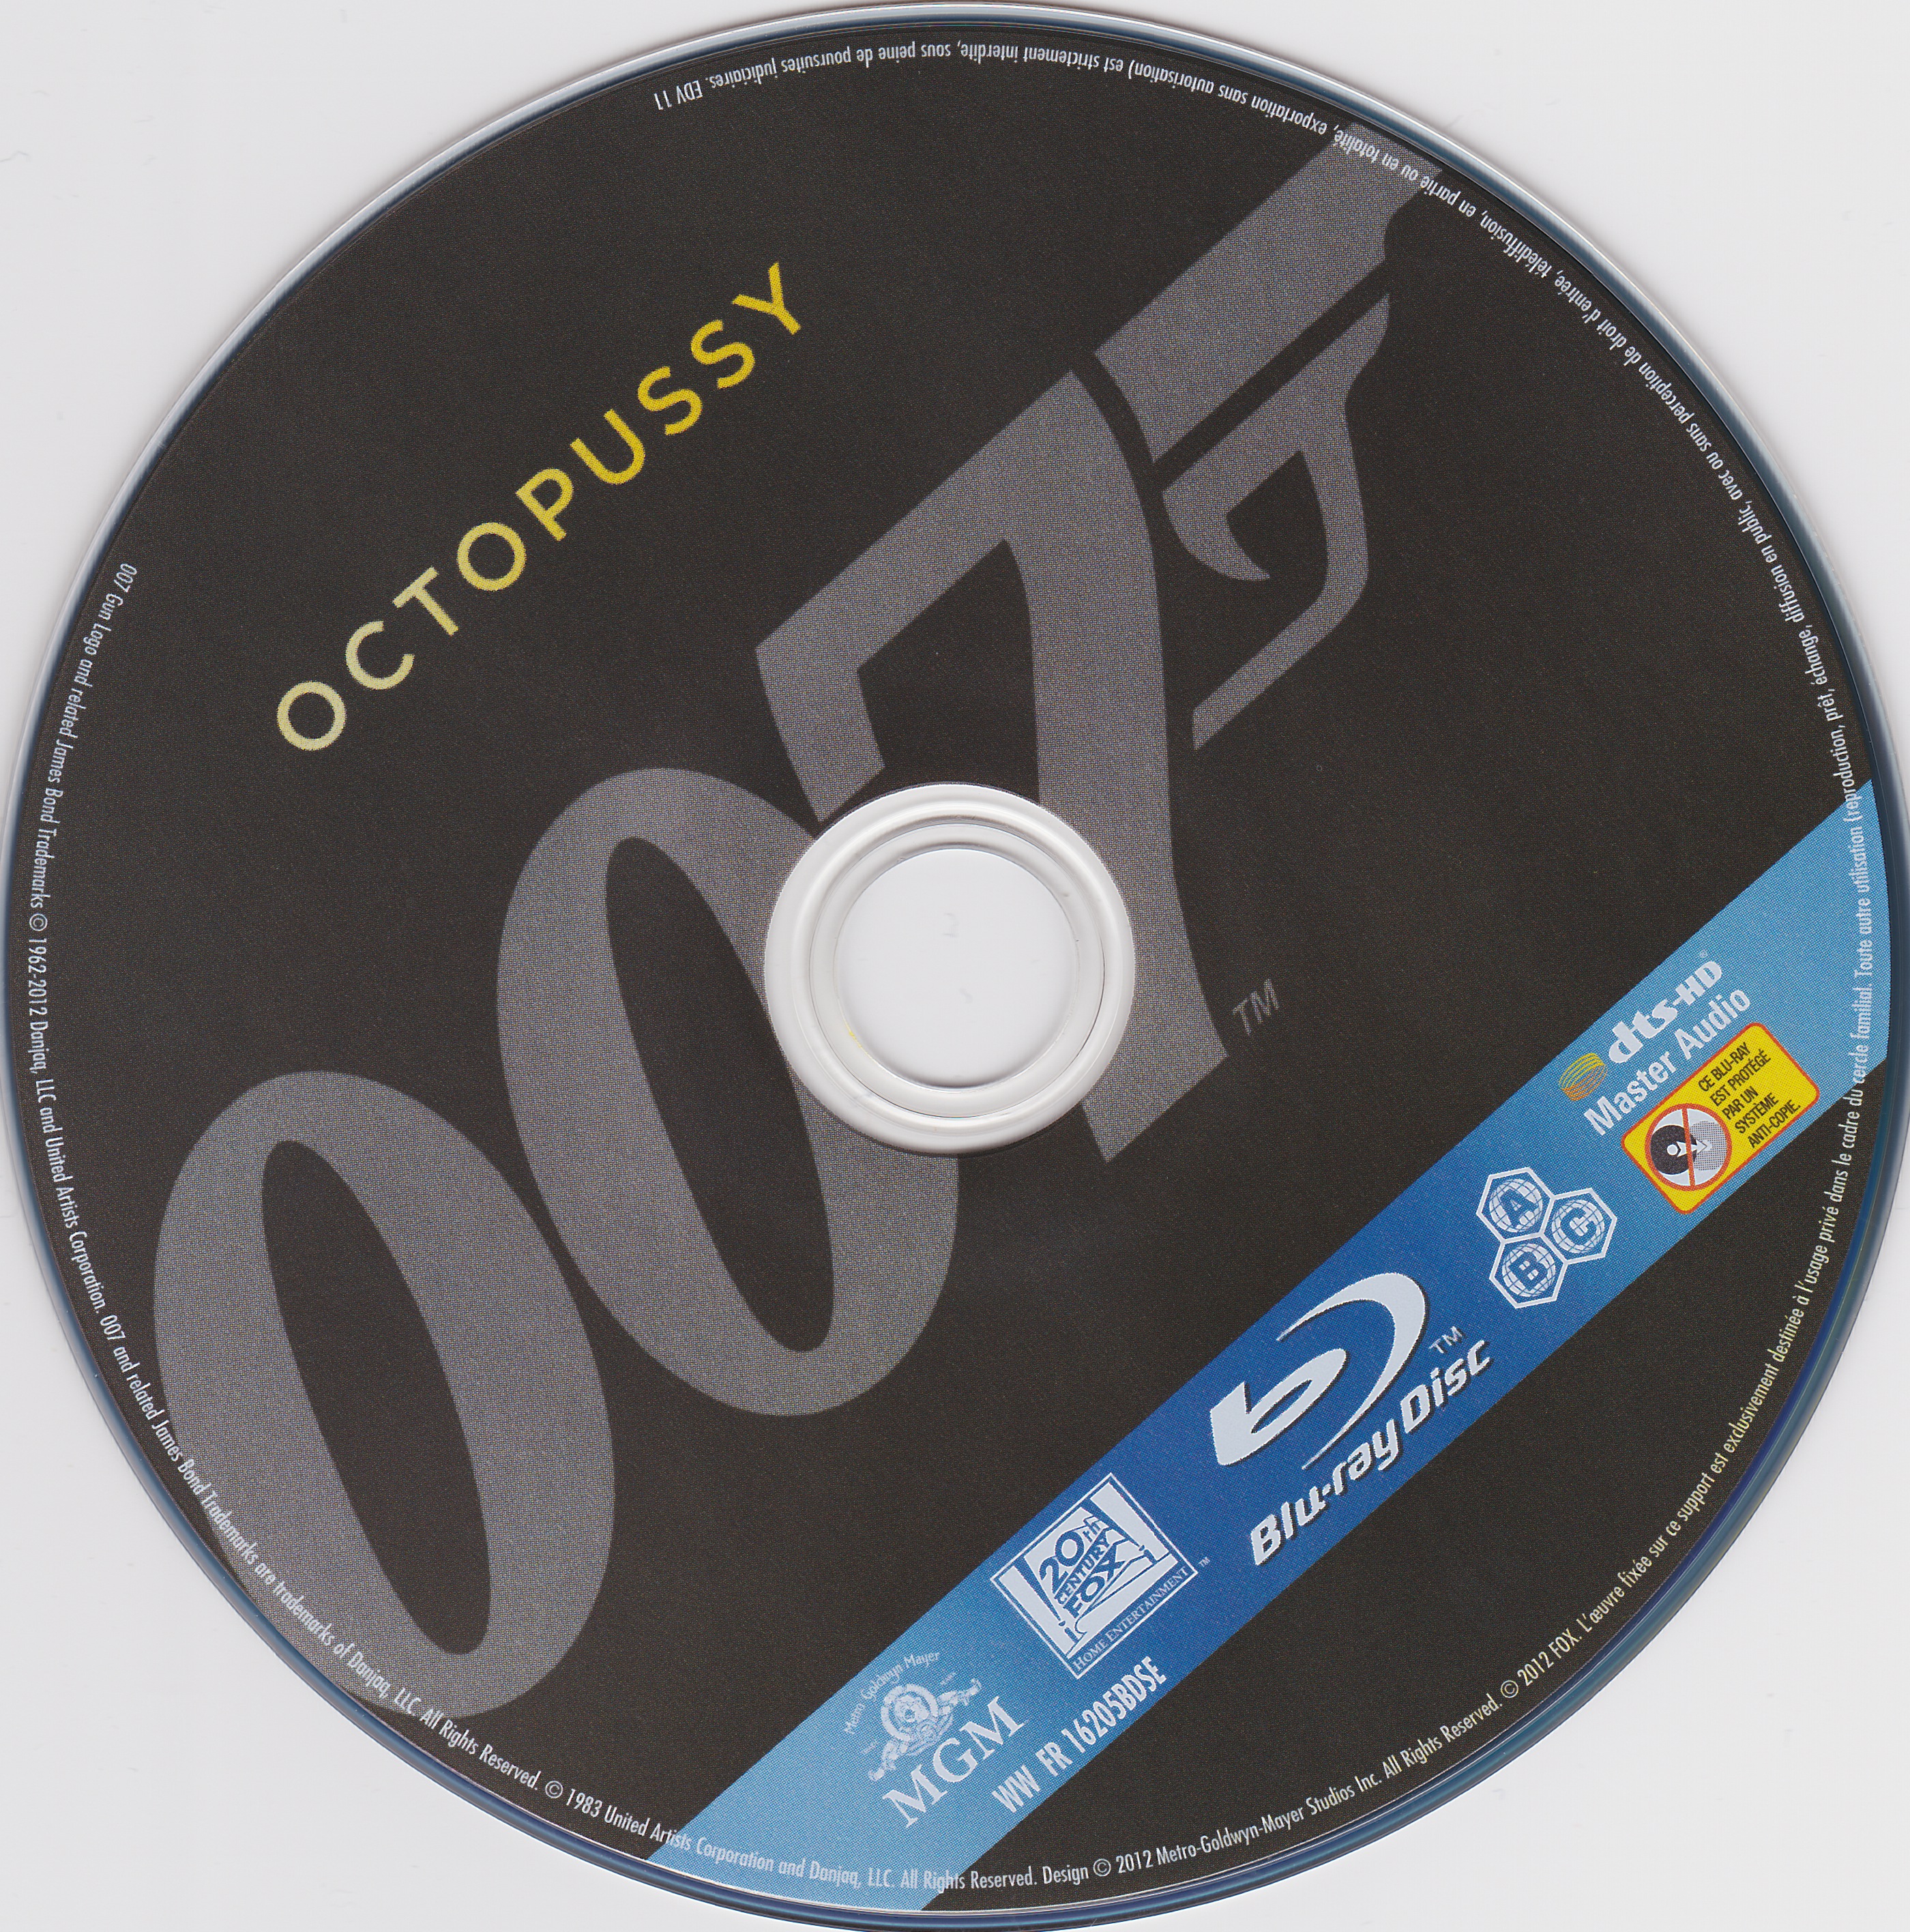 James Bond 007 Octopussy (BLU-RAY)